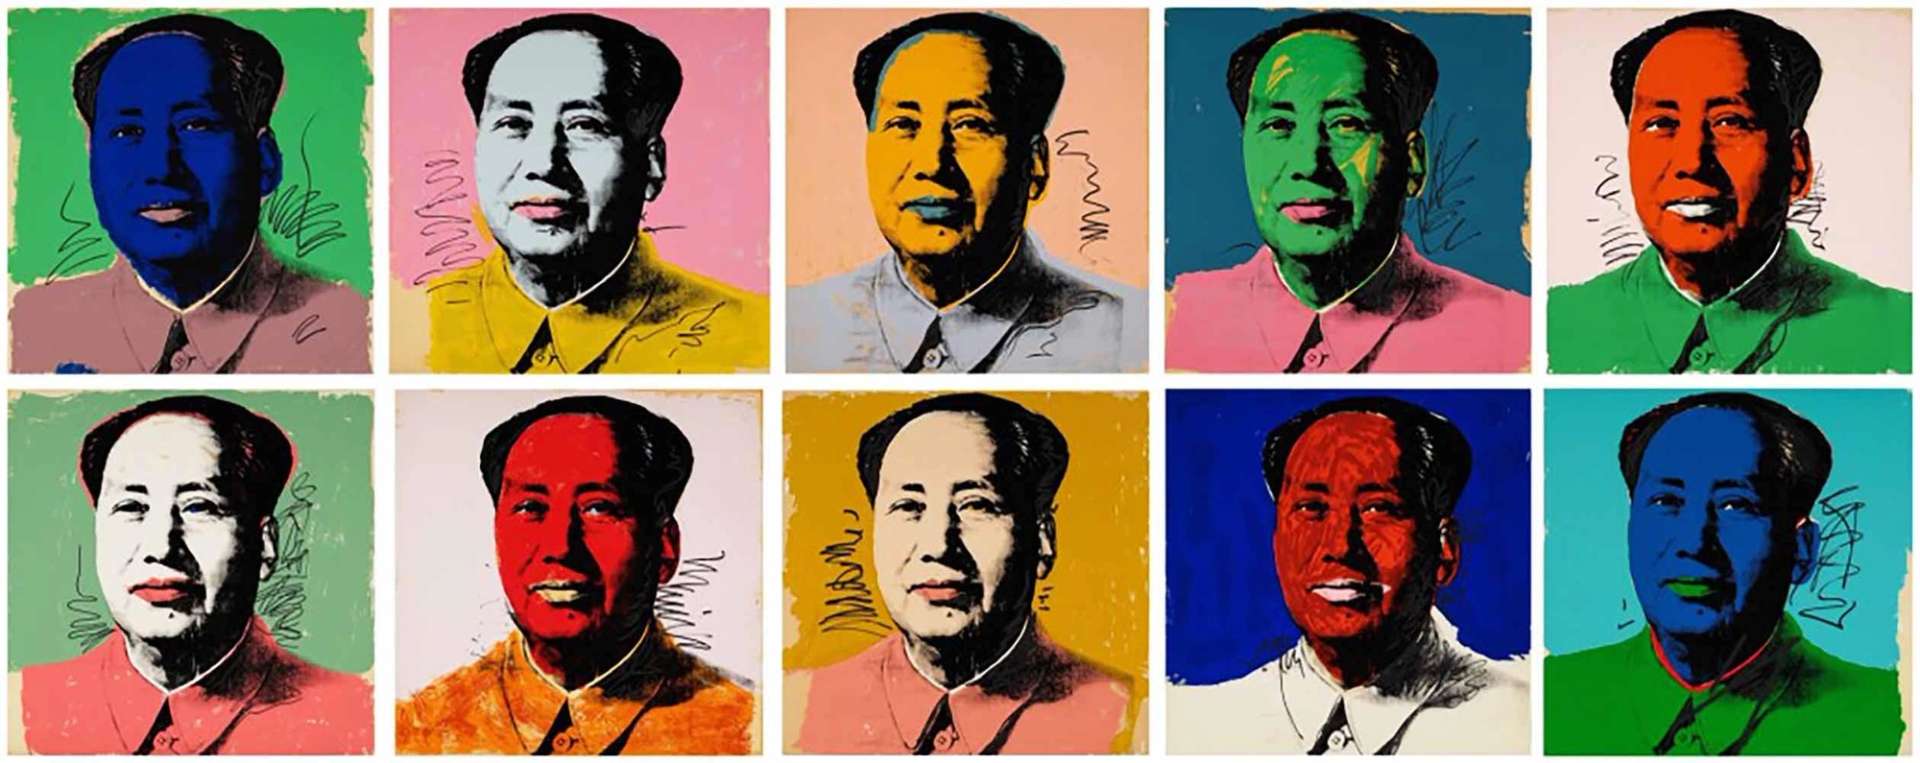 Mao (complete set) - Signed Print by Andy Warhol 1972 - MyArtBroker